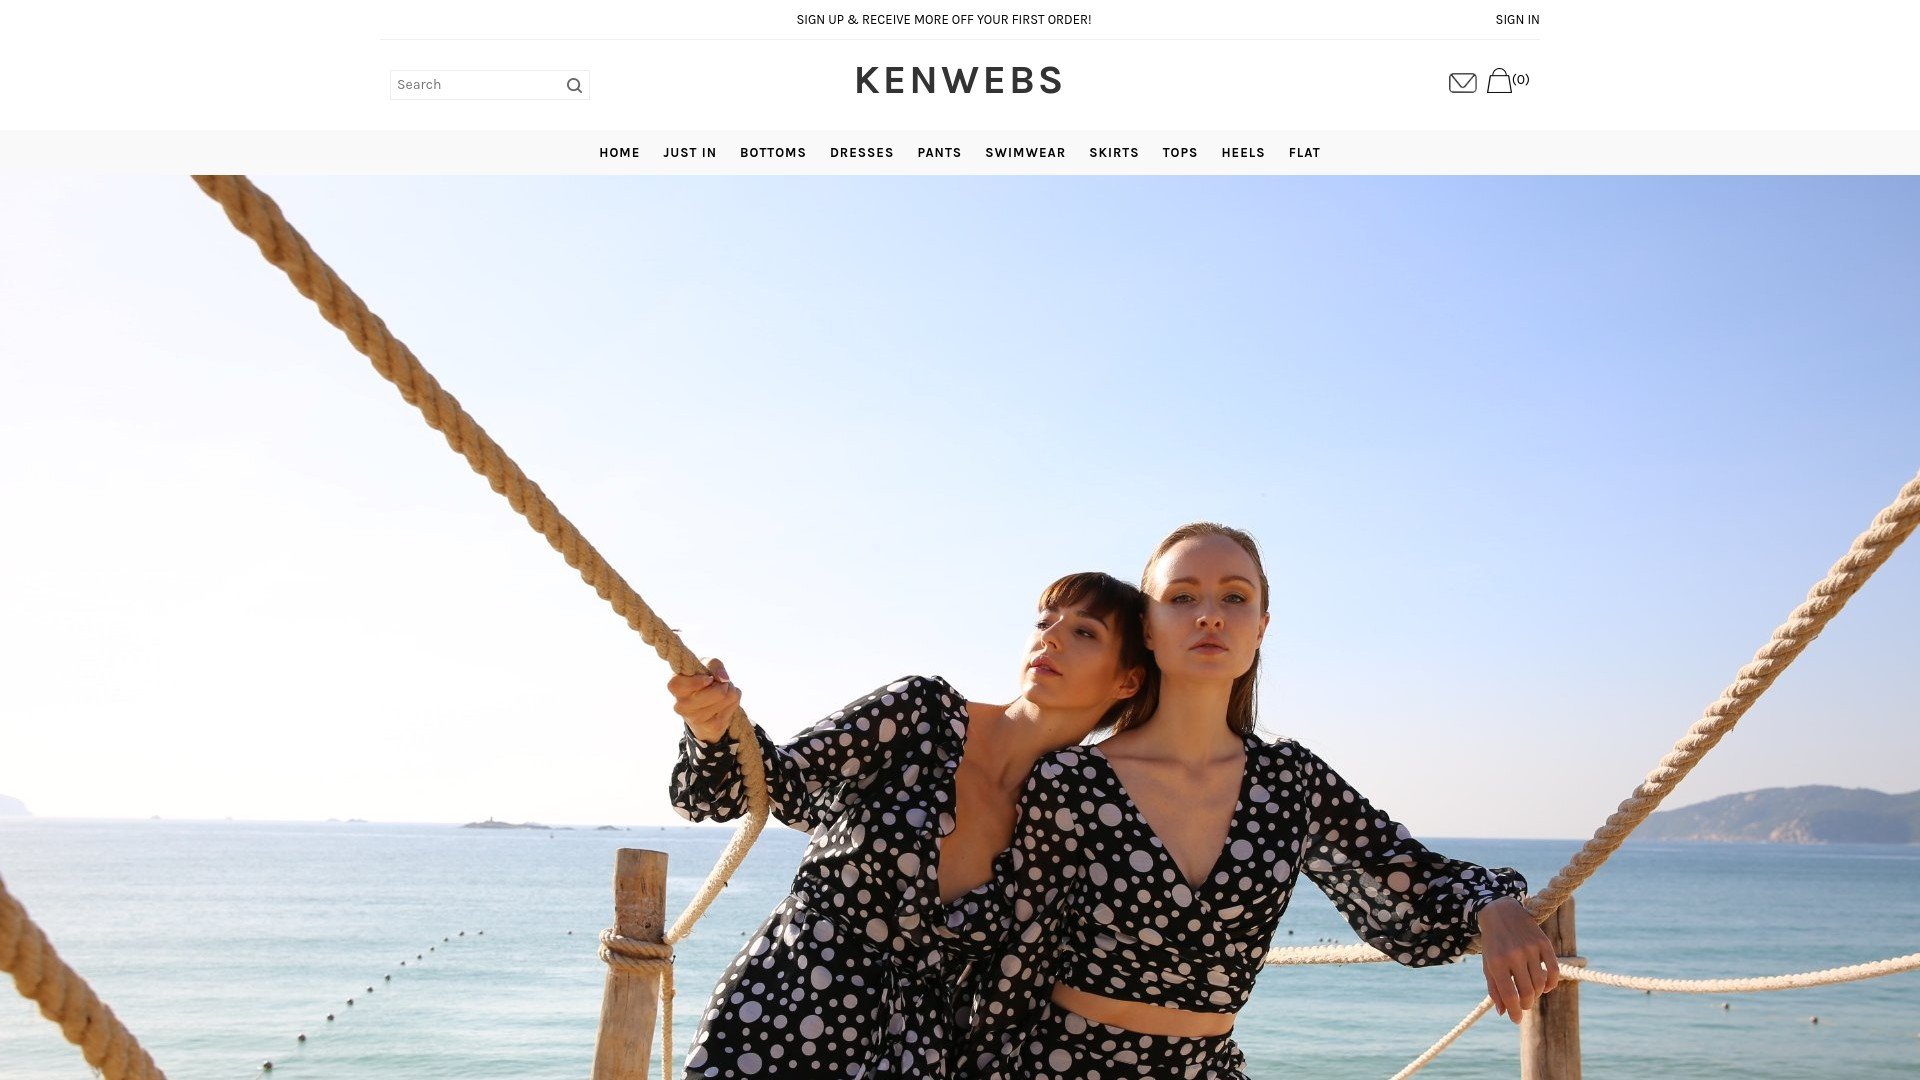 Kenwebs located at kenwebs.com